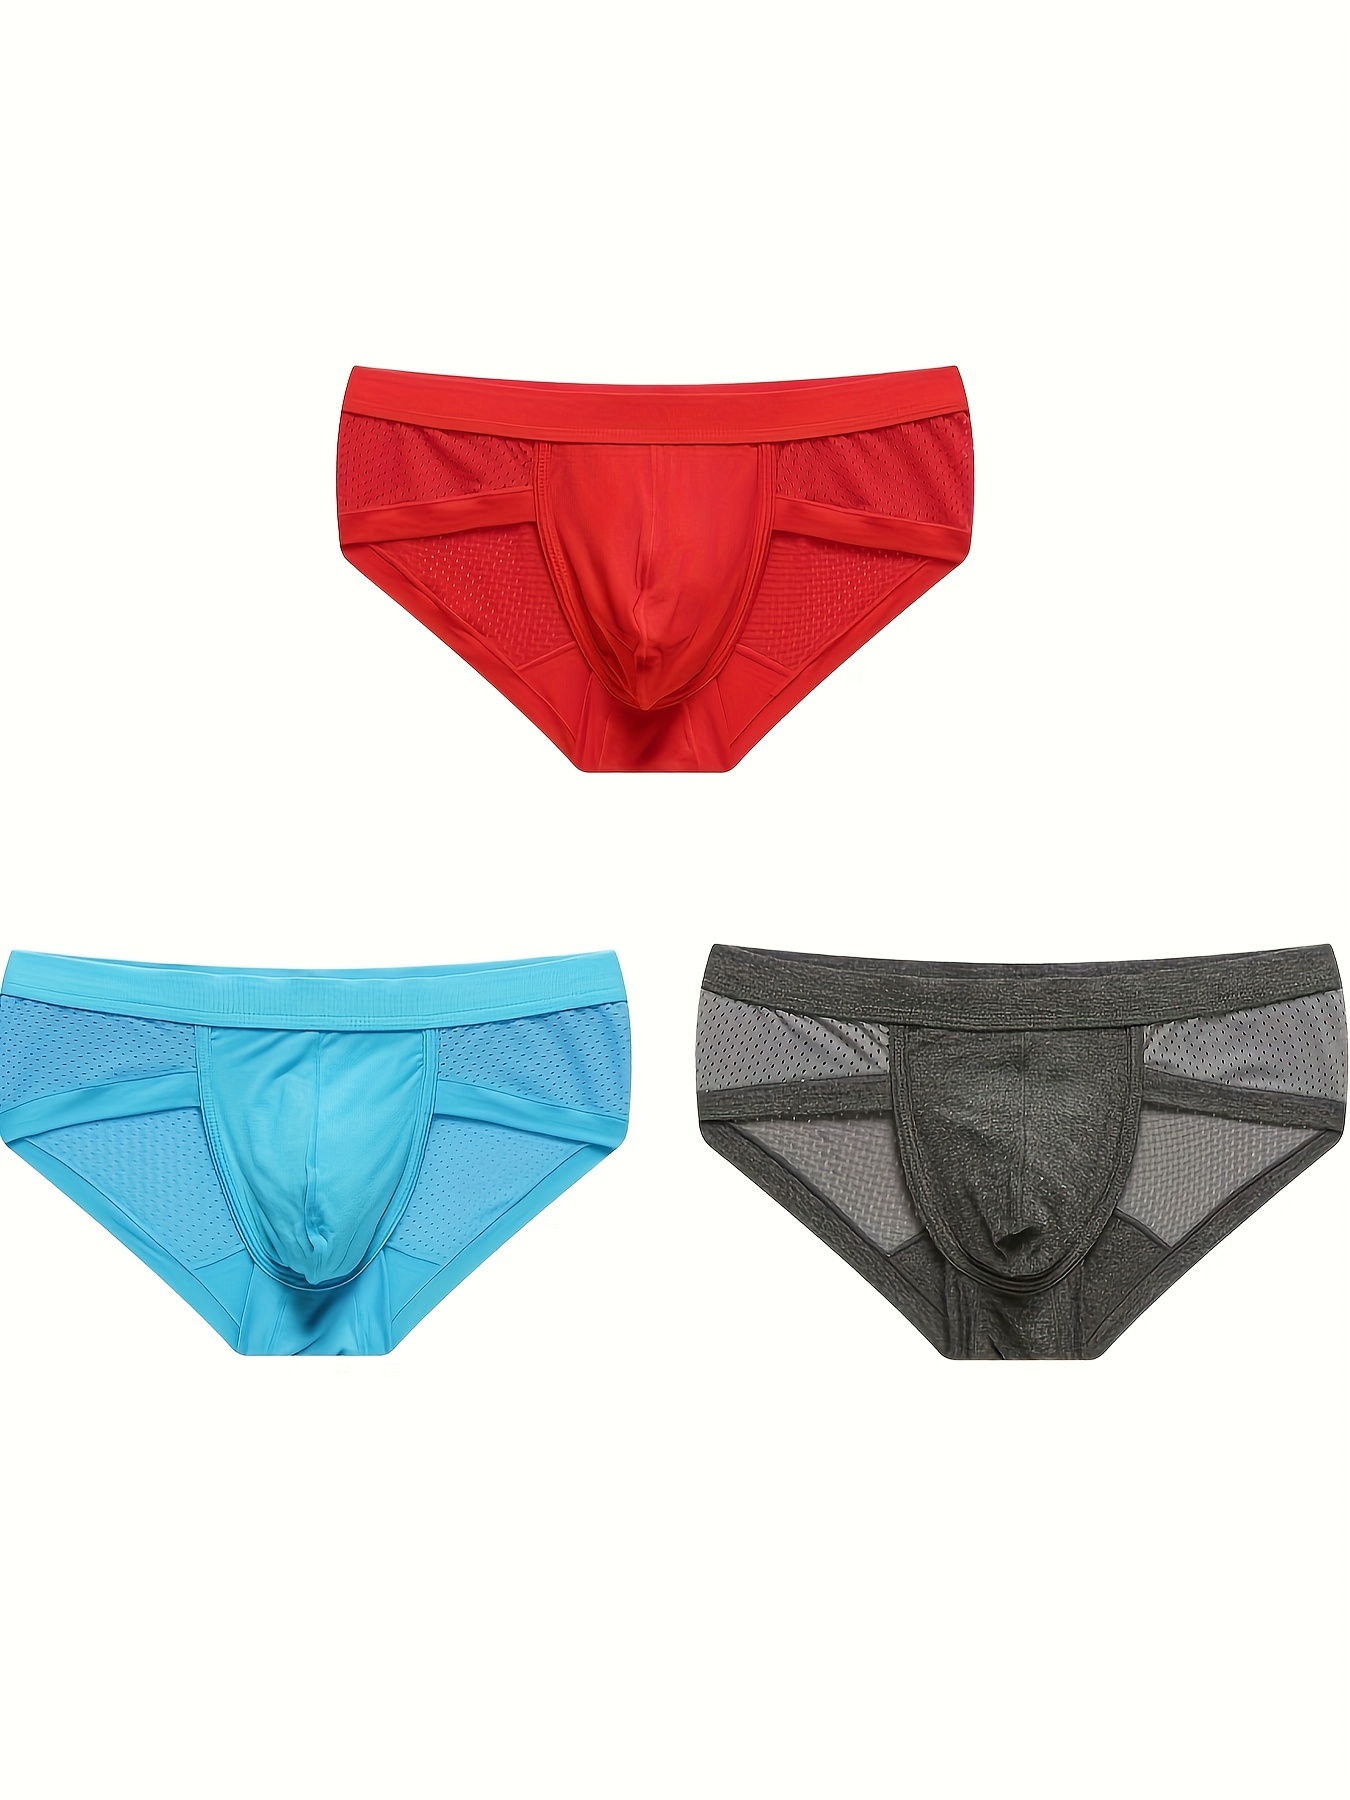 exofficio womens underwear, panties for women